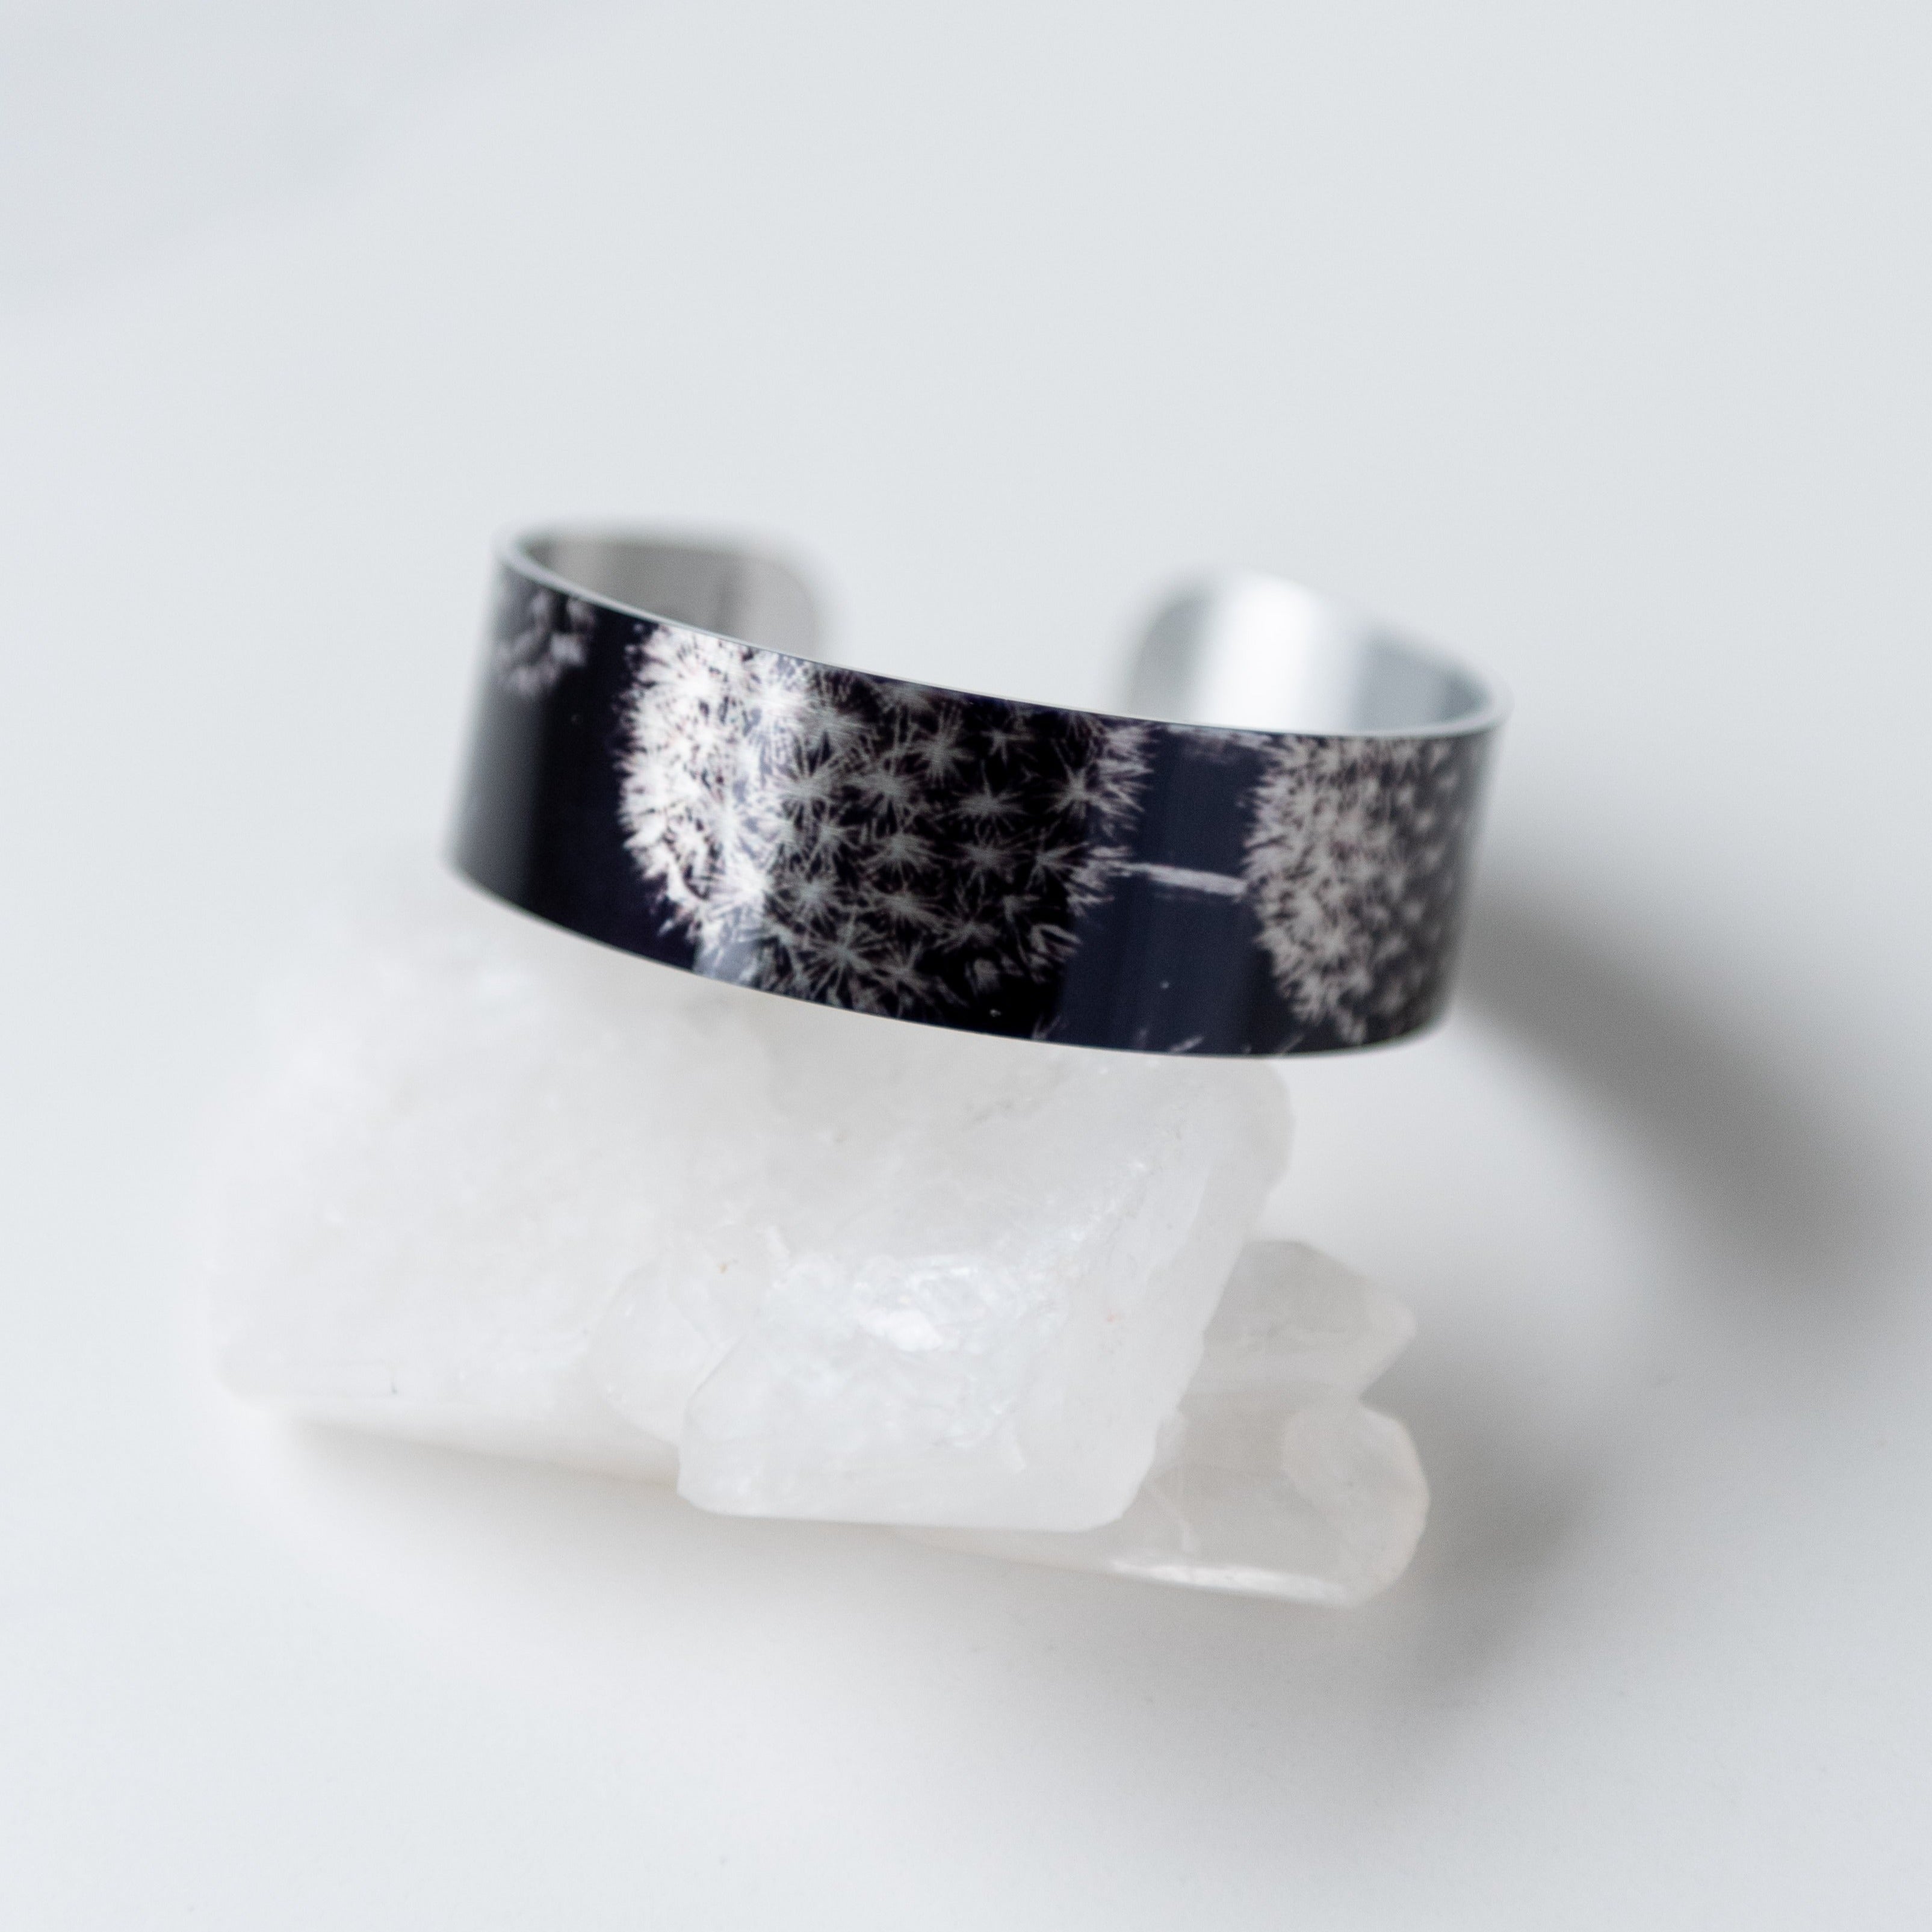 Aluminum Cuff Bracelet- Dandelion Wishes